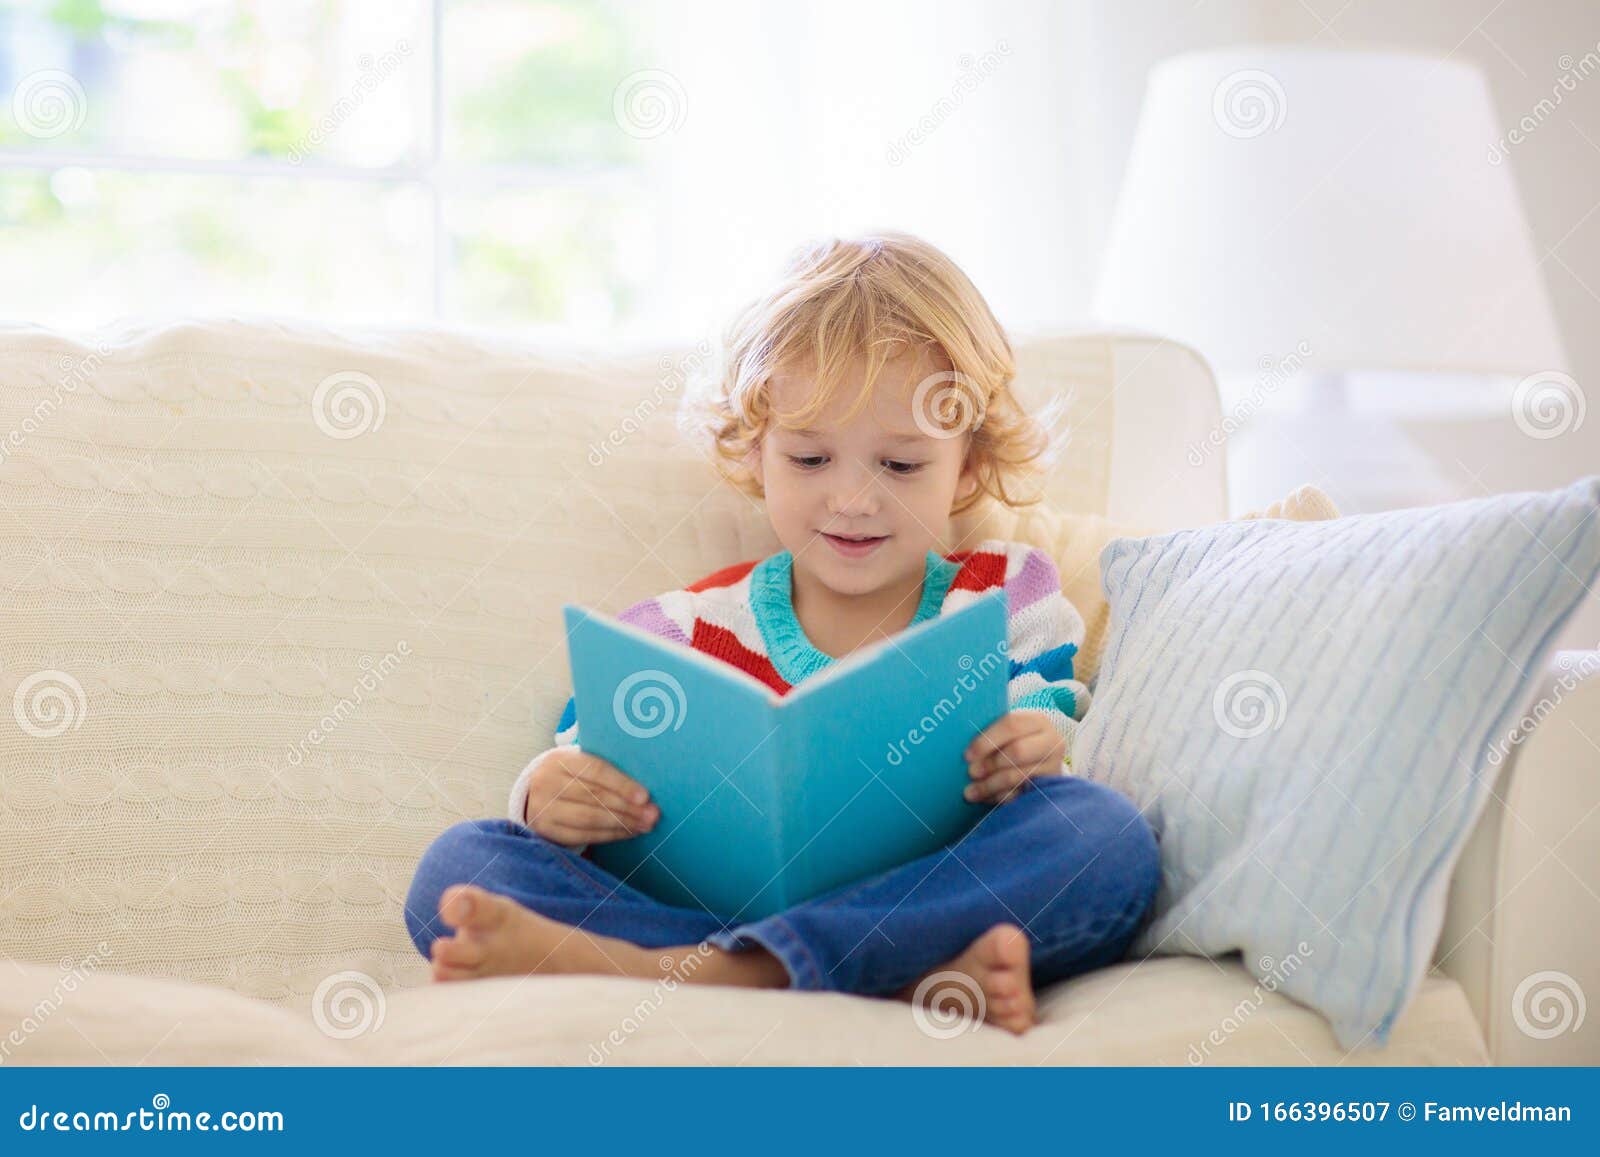 child reading book. kids read books